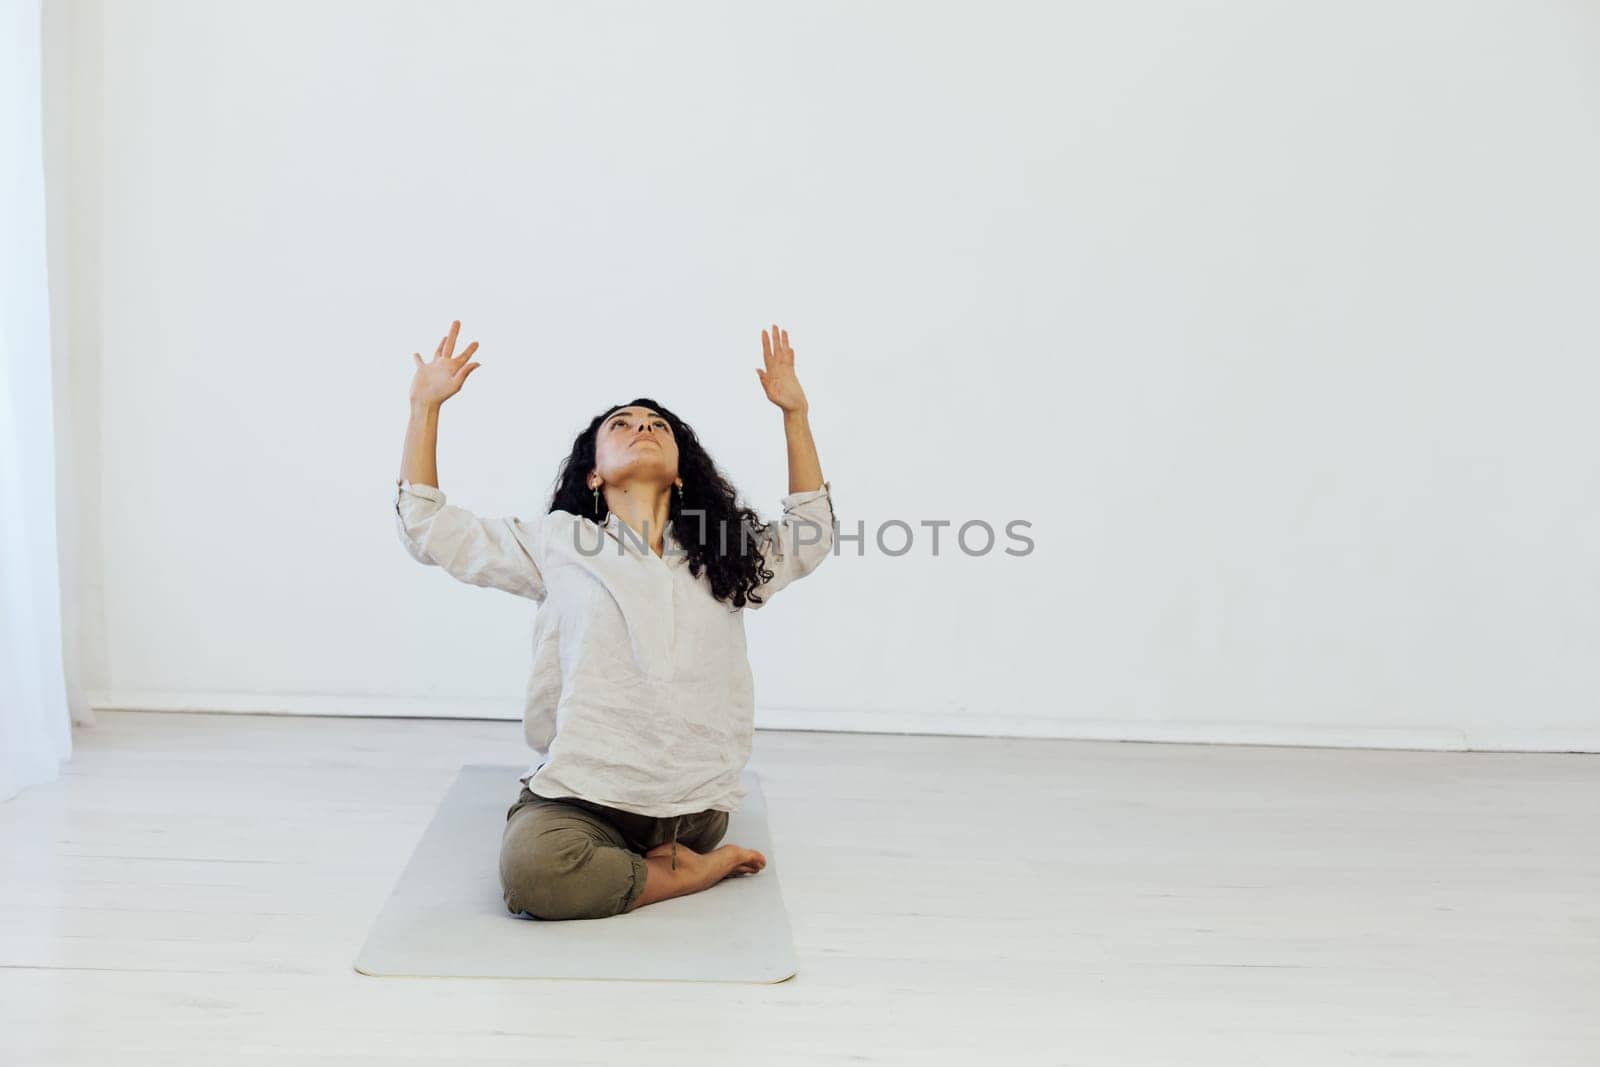 lotus pose training in the studio woman doing yoga